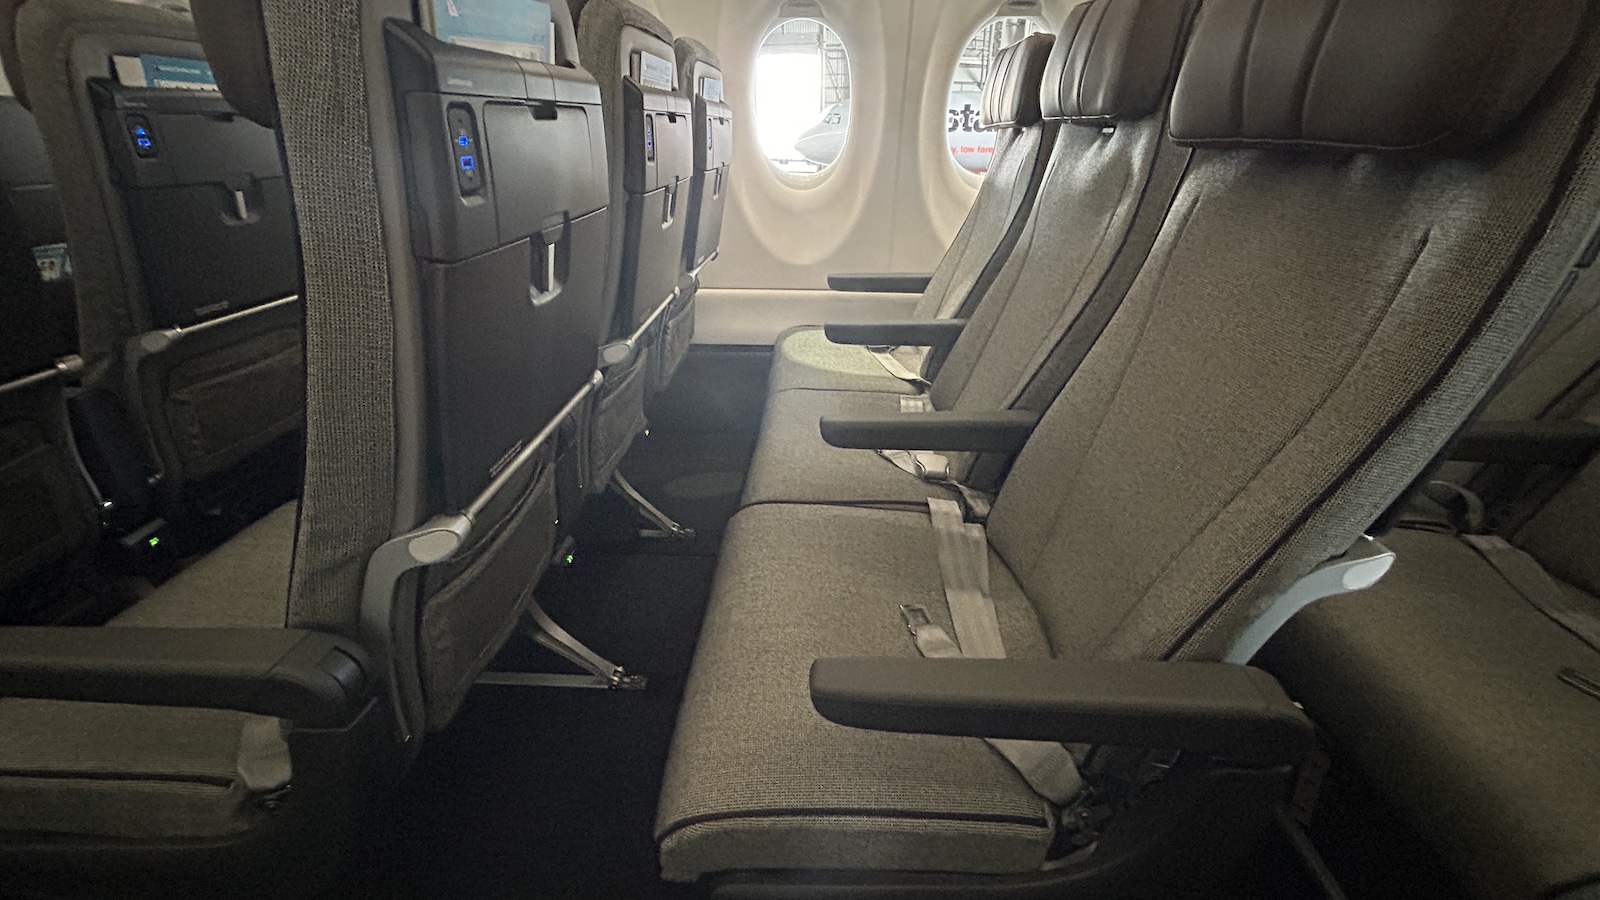 Qantaslink A220 Economy Class Fabric Seats Side View Point Hacks by Daniel Sciberras